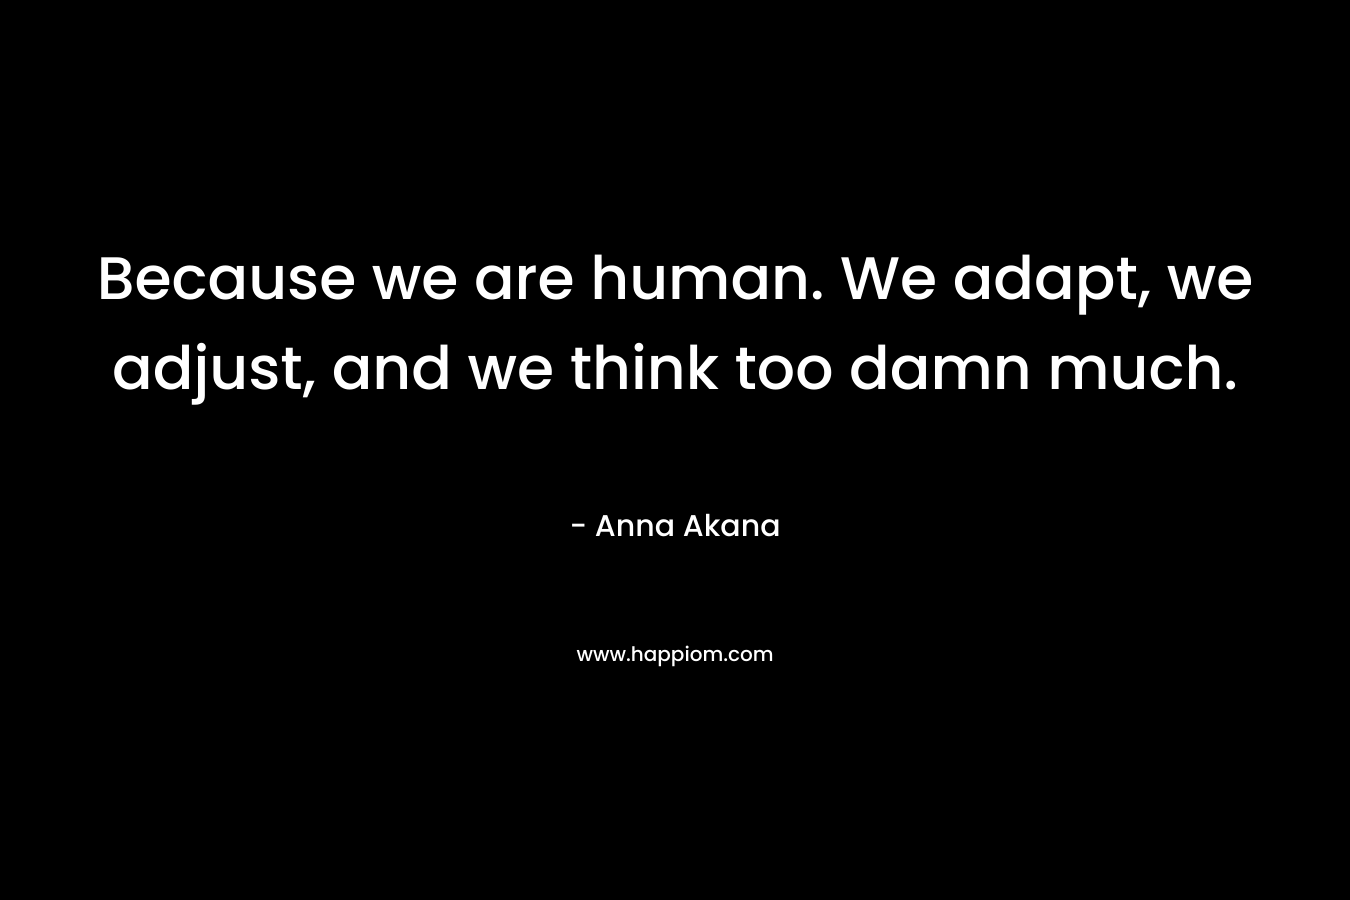 Because we are human. We adapt, we adjust, and we think too damn much. – Anna Akana